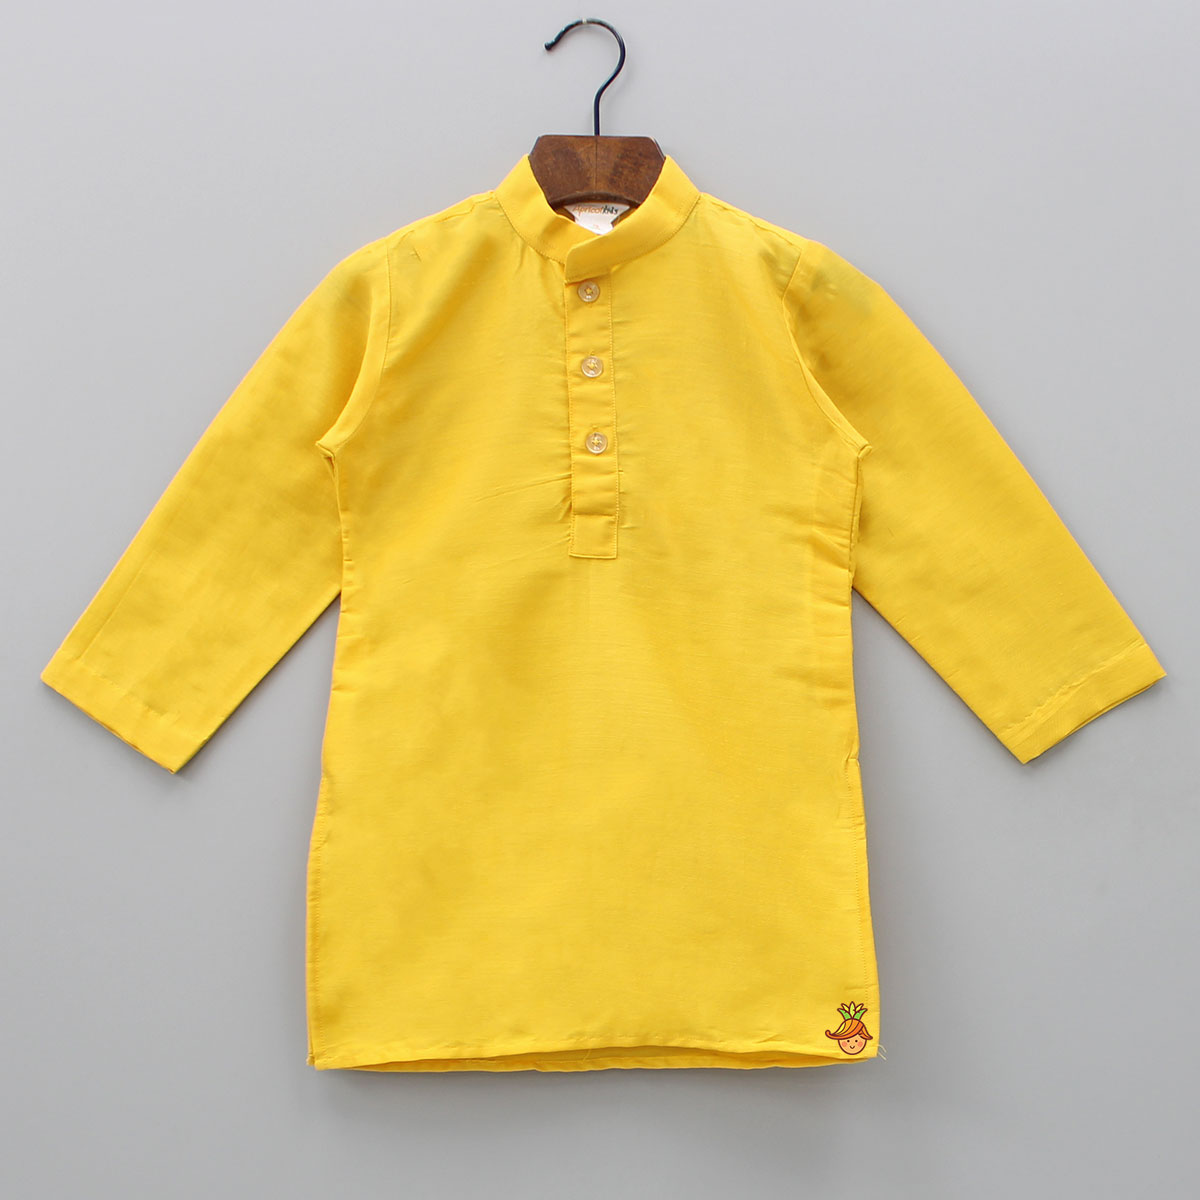 Stripped Asymmetric Jacket With Mustard Yellow Kurta And Pyjama